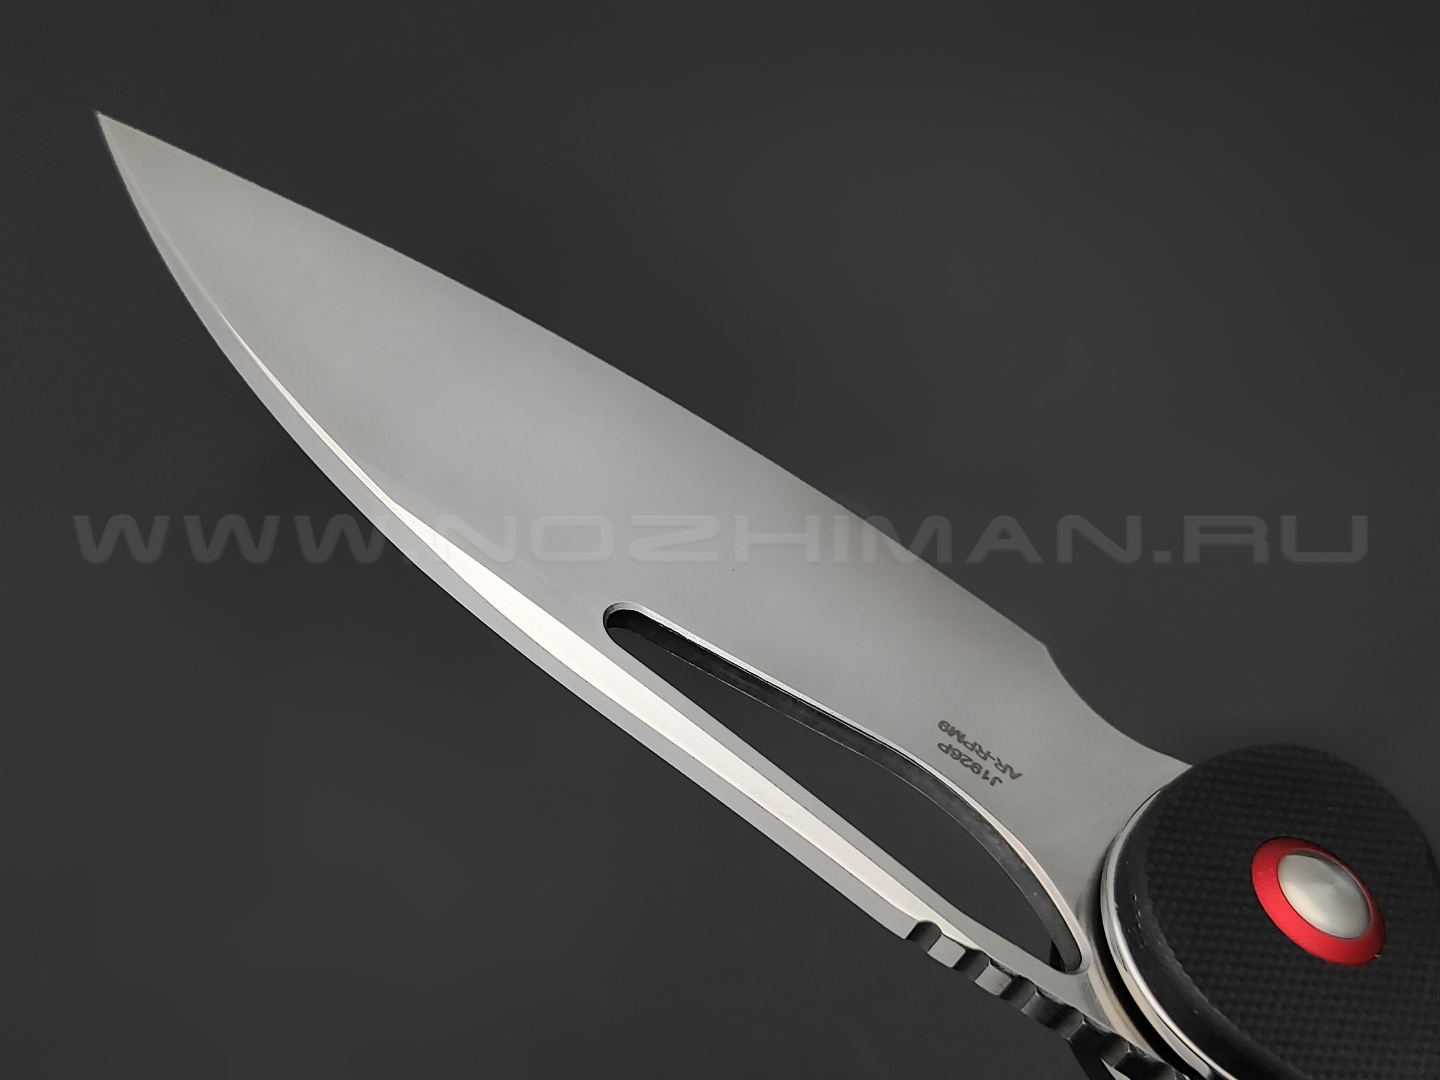 Нож CJRB Lago J1926-BK сталь AR-RPM9, рукоять G10 black